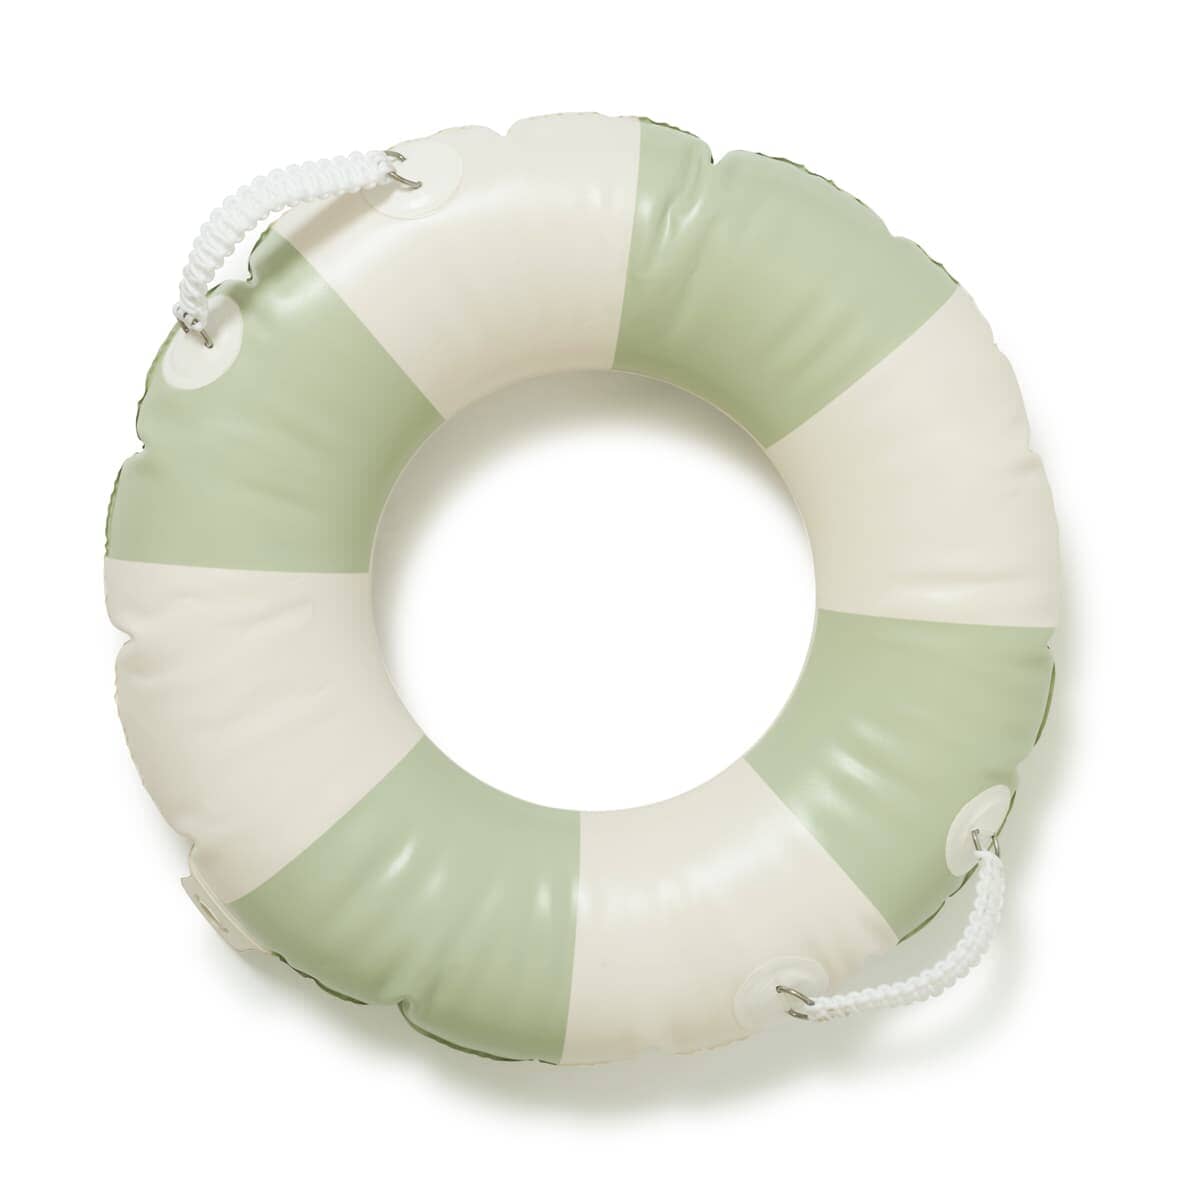 Studio image of green pool float